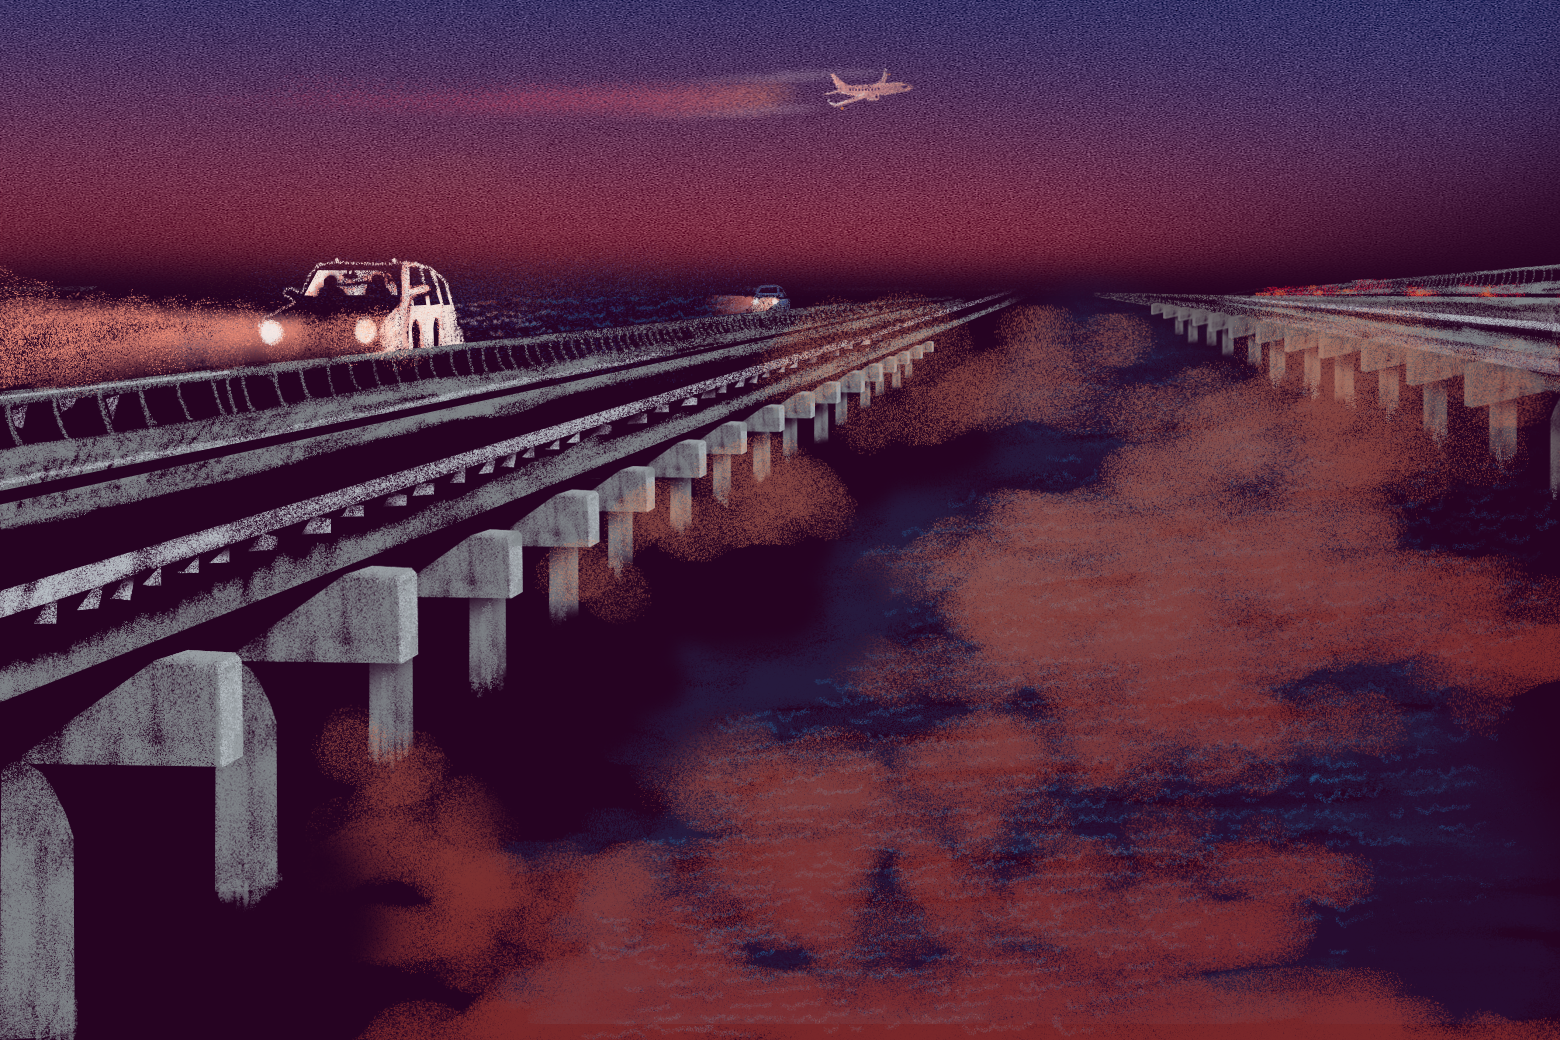 A station wagon drives across the Lake Pontchartrain Causeway as an airplane flies overhead.